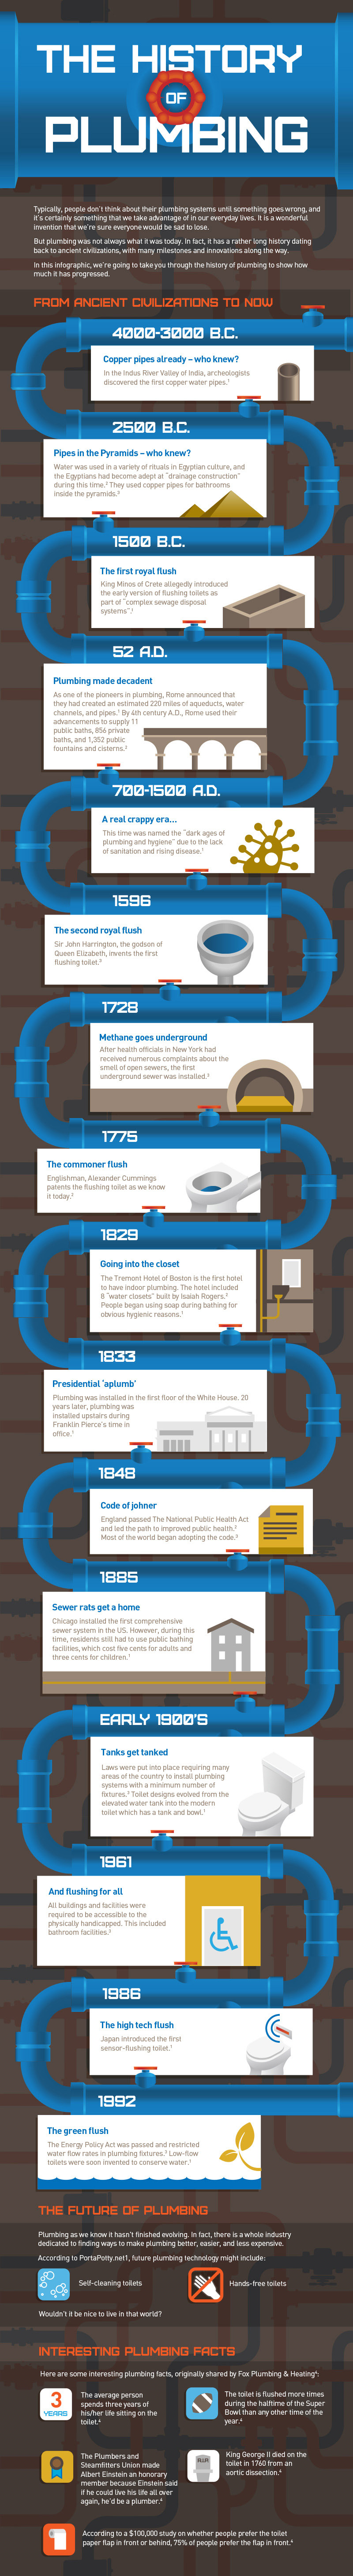 The History of Plumbing